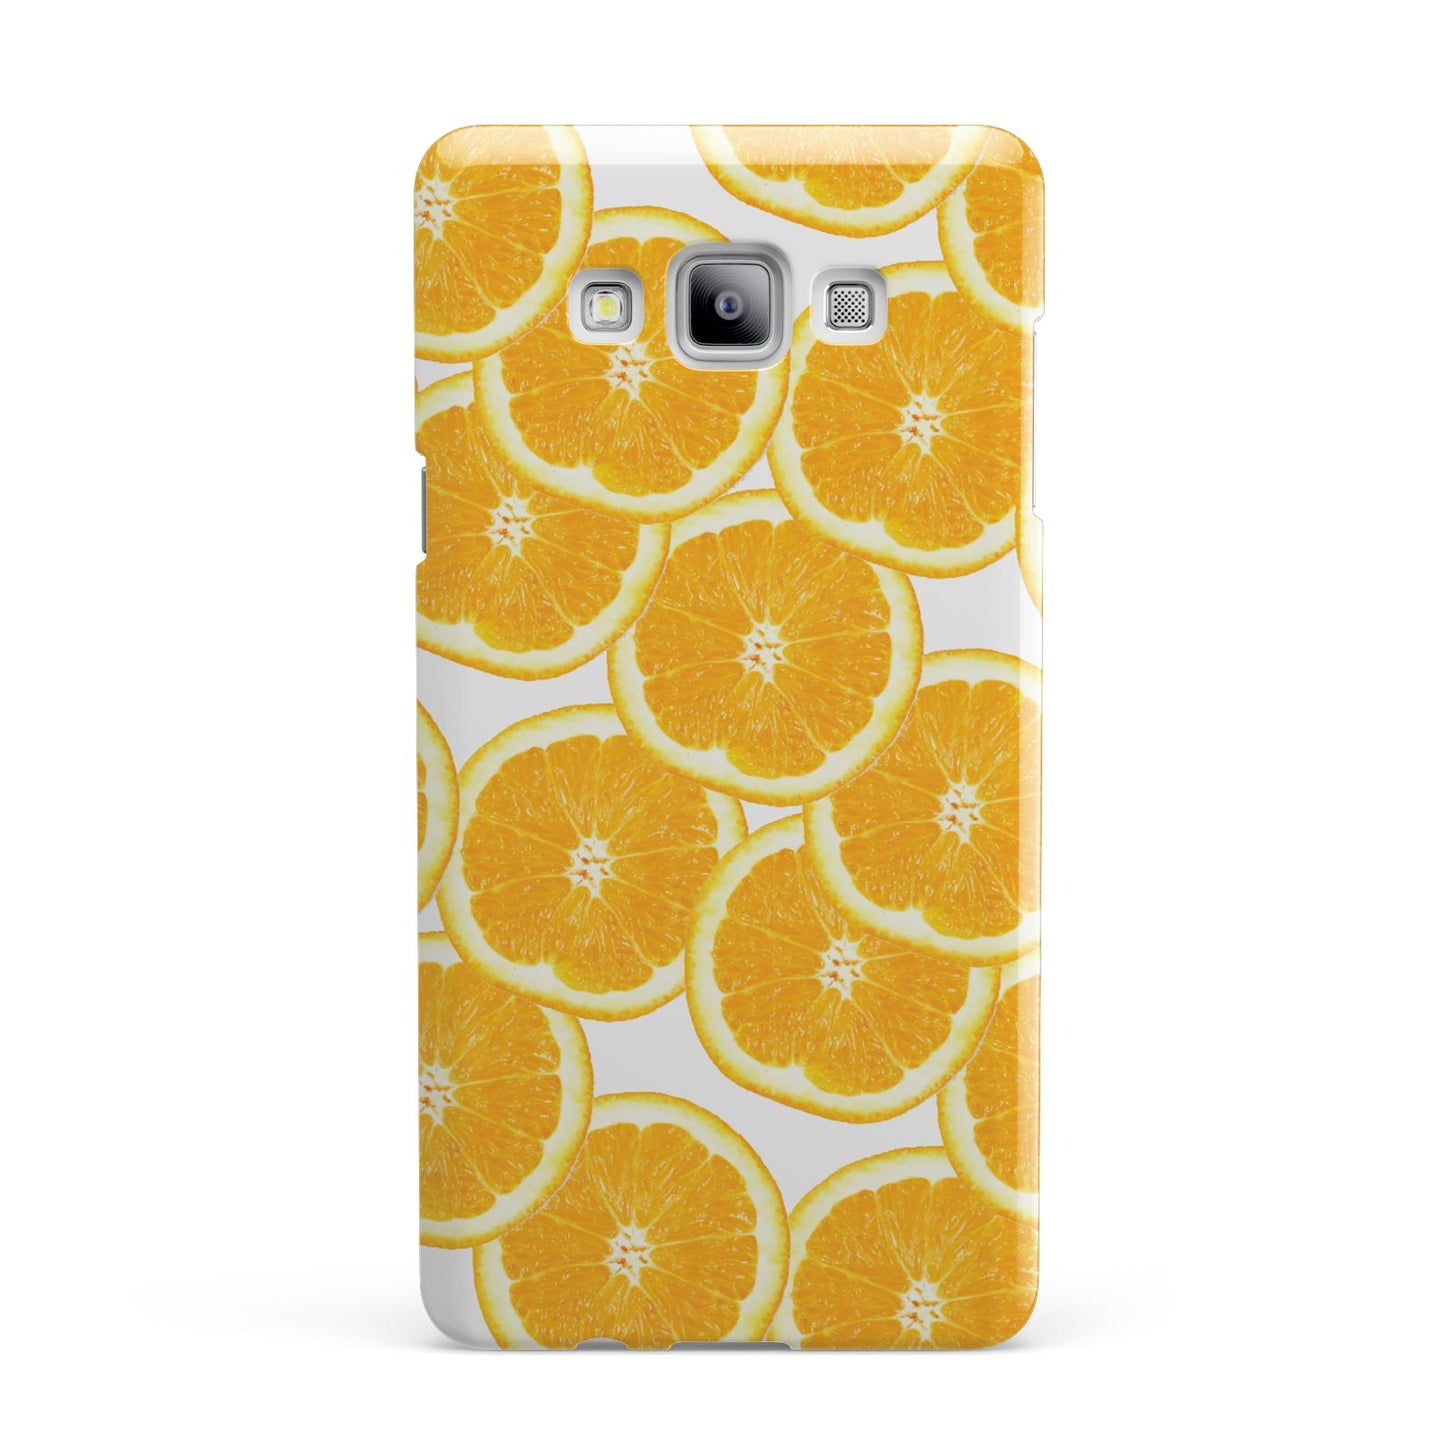 Orange Fruit Slices Samsung Galaxy A7 2015 Case